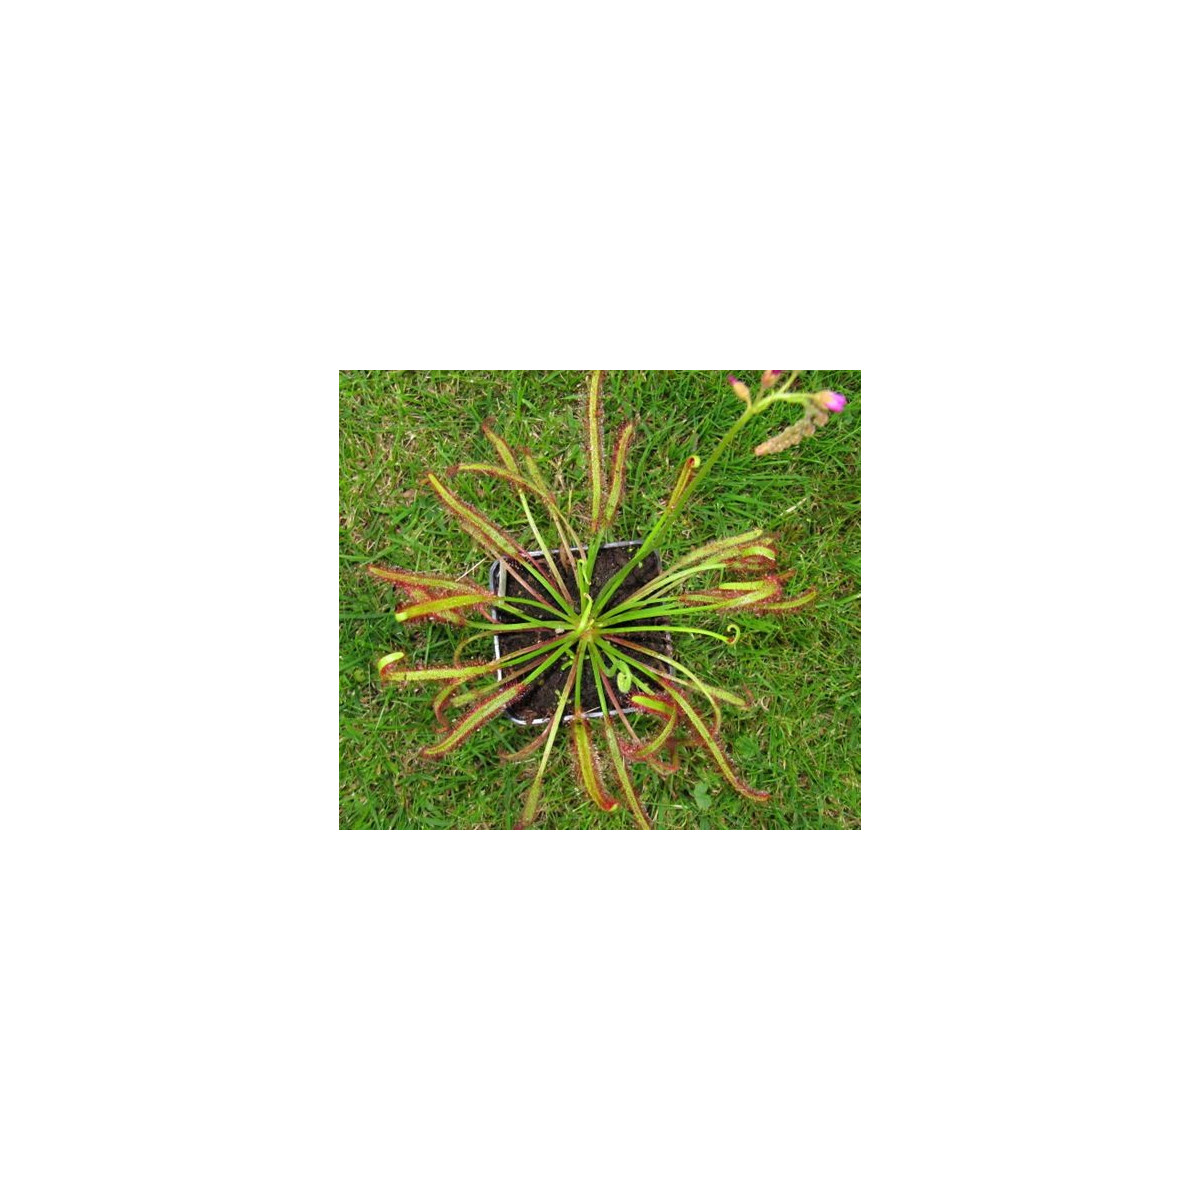 Rosnatka červená - Drosera capensis Giftberg - semena - 15 ks